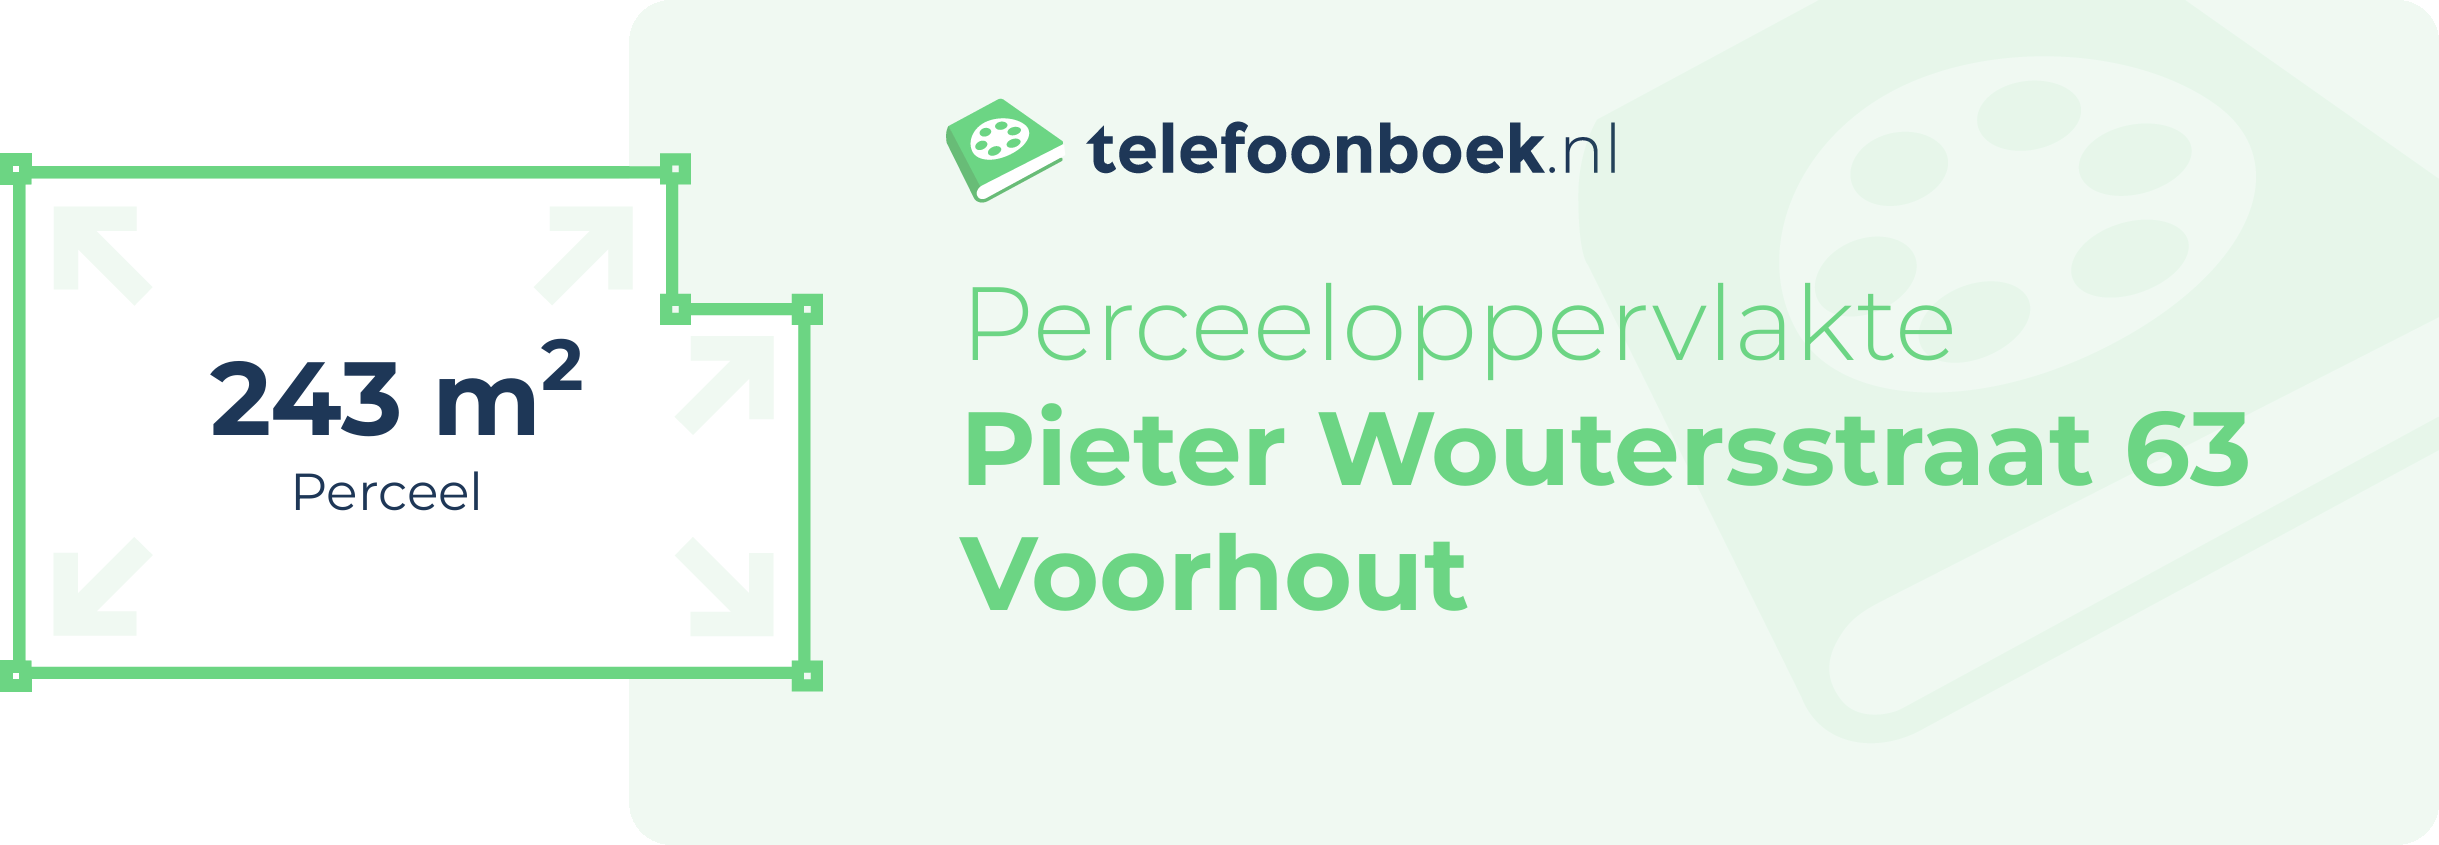 Perceeloppervlakte Pieter Woutersstraat 63 Voorhout